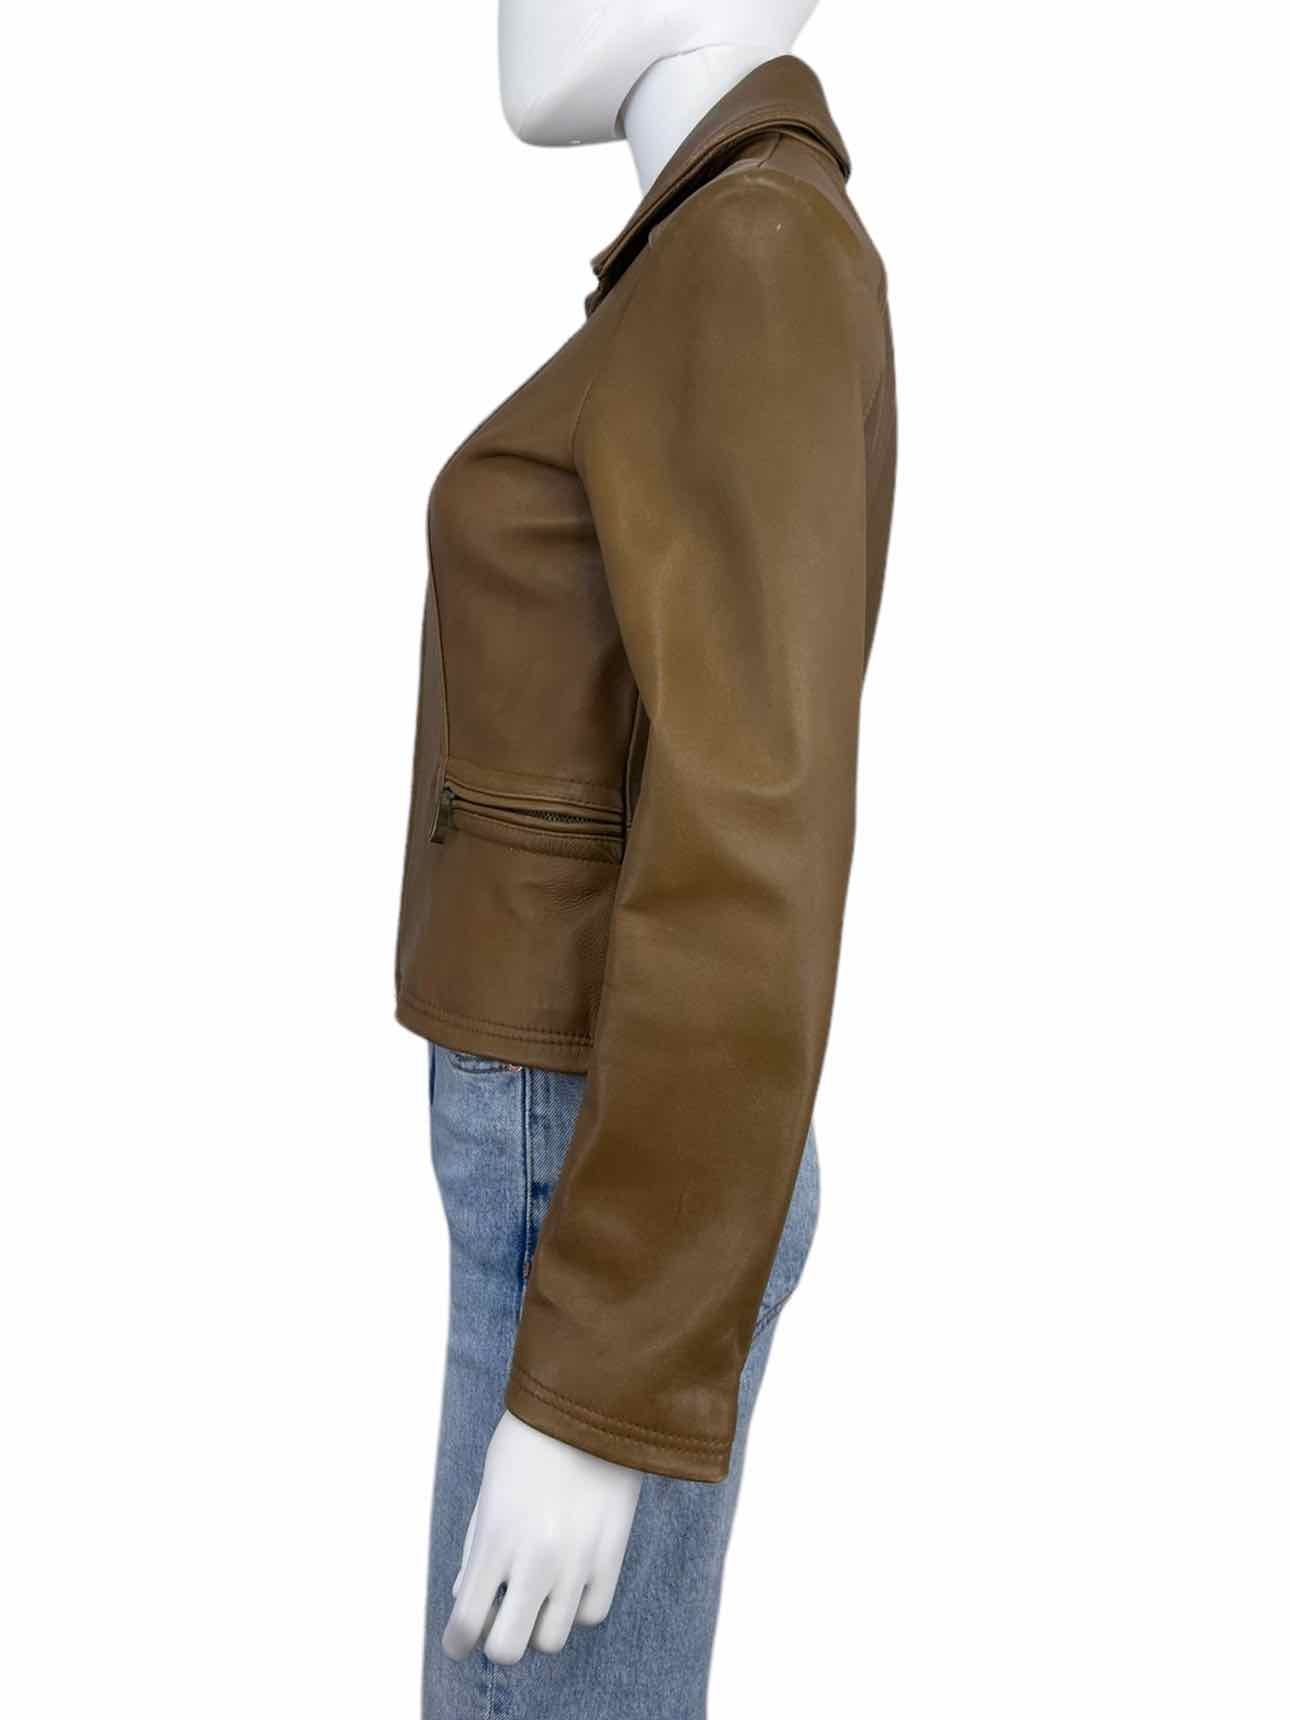 Pelle Moda Tan Vintage Genuine Leather Jacket Size XS